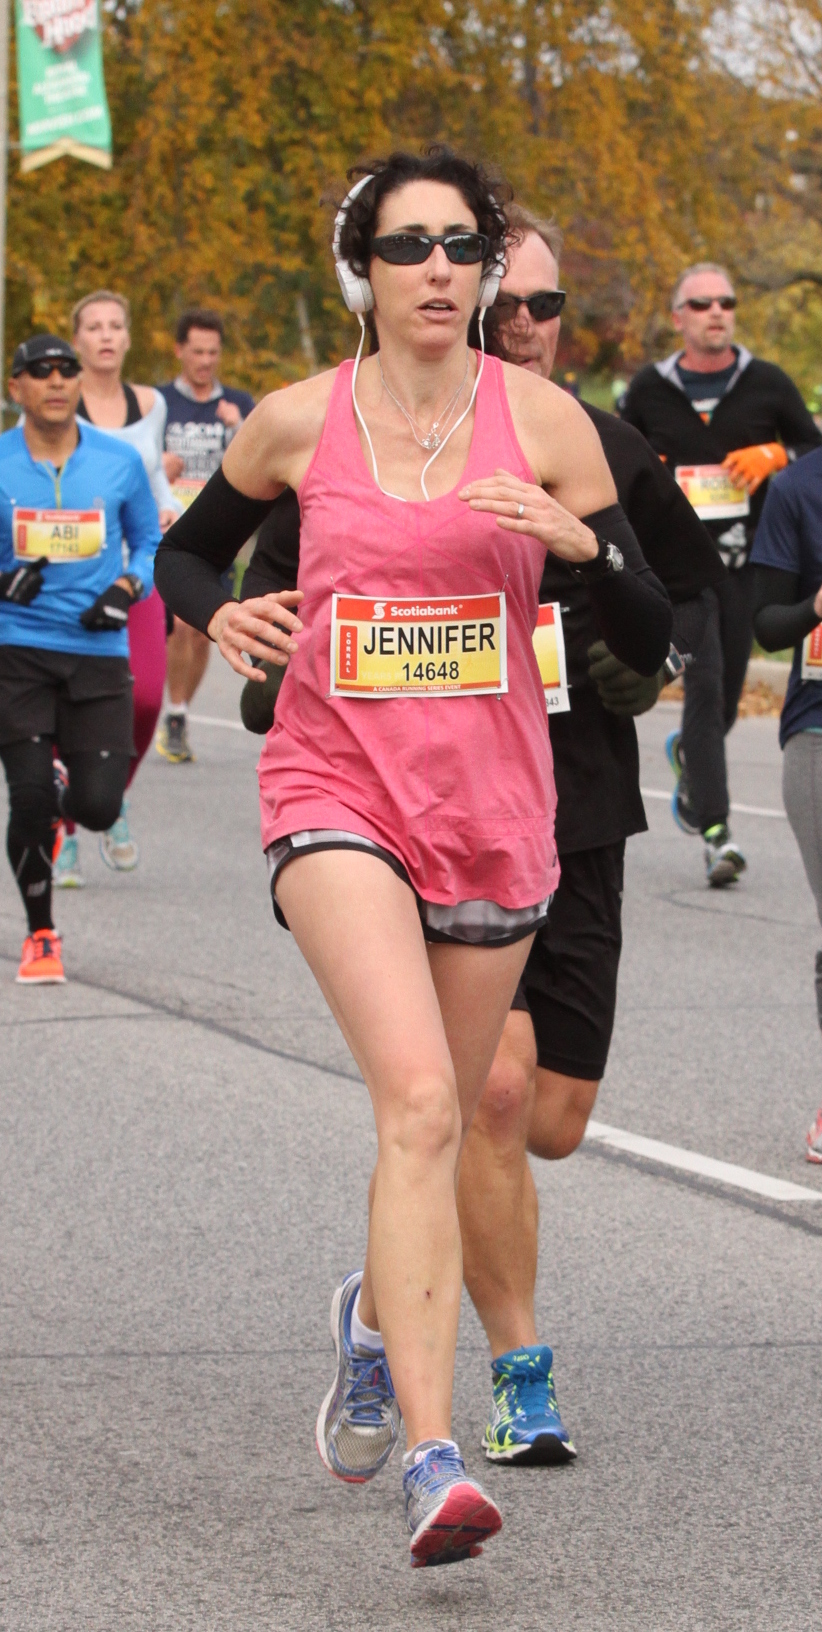 Jennifer racing the 2014 Scotiabank Waterfront Half Marathon in 1:36.16!